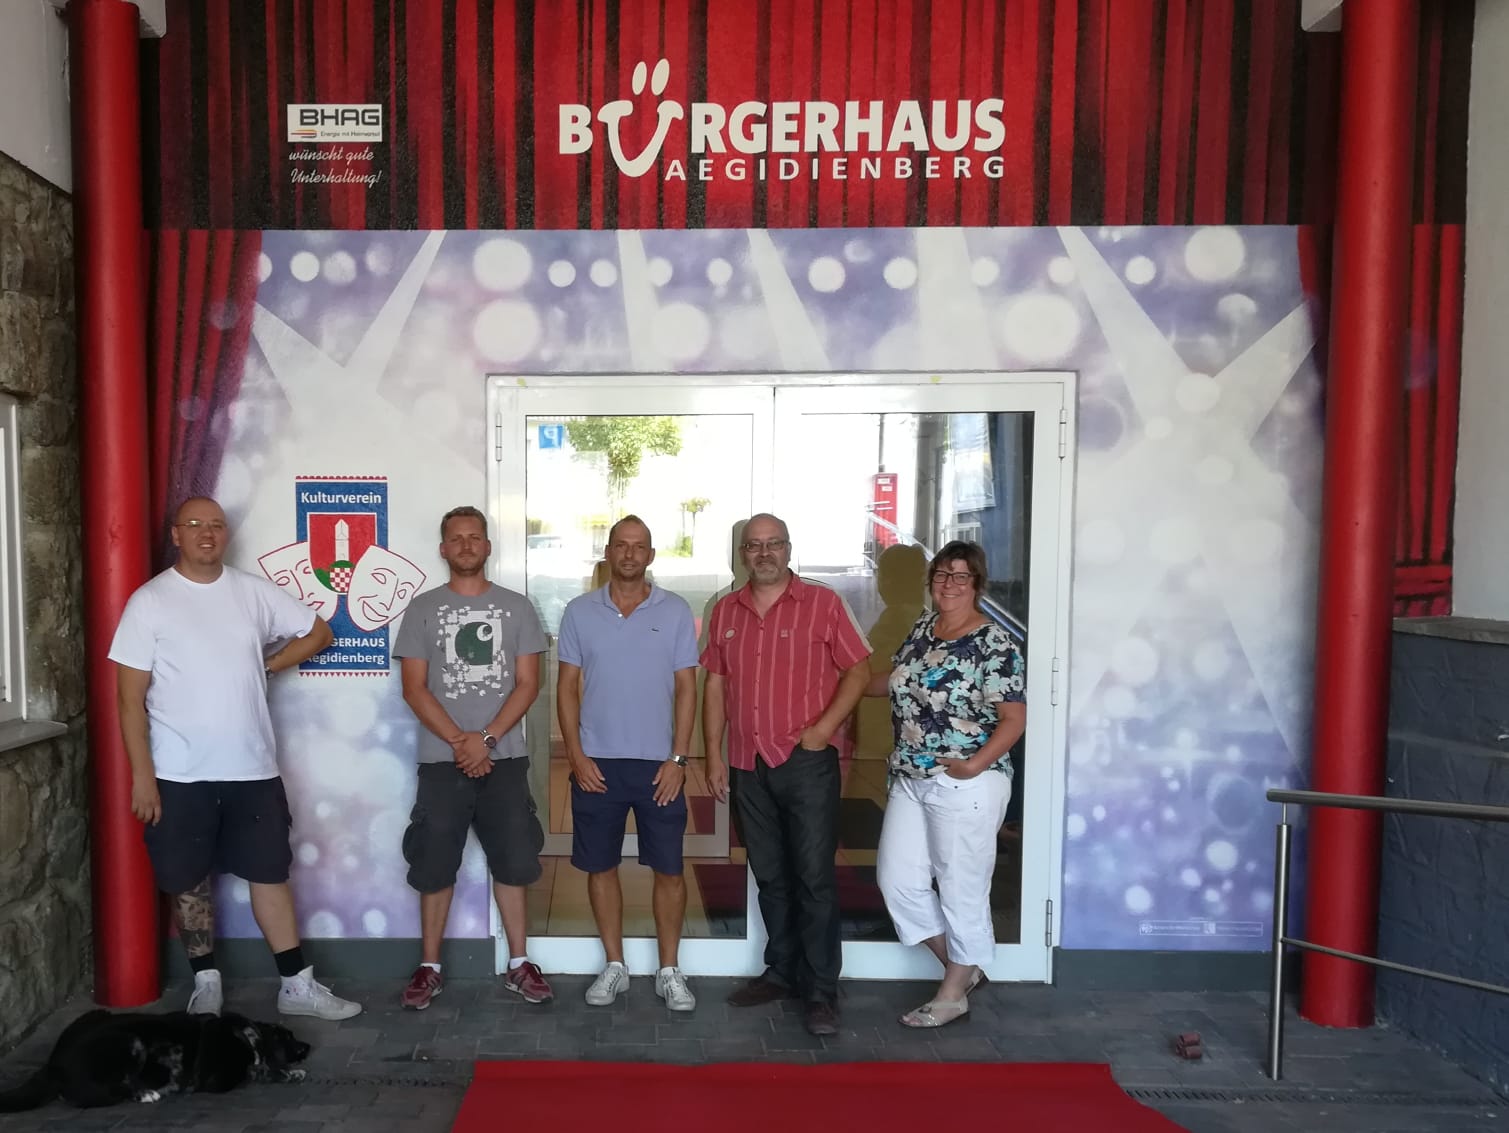 AEGIDIENBERG: Bürgerhaus renoviert